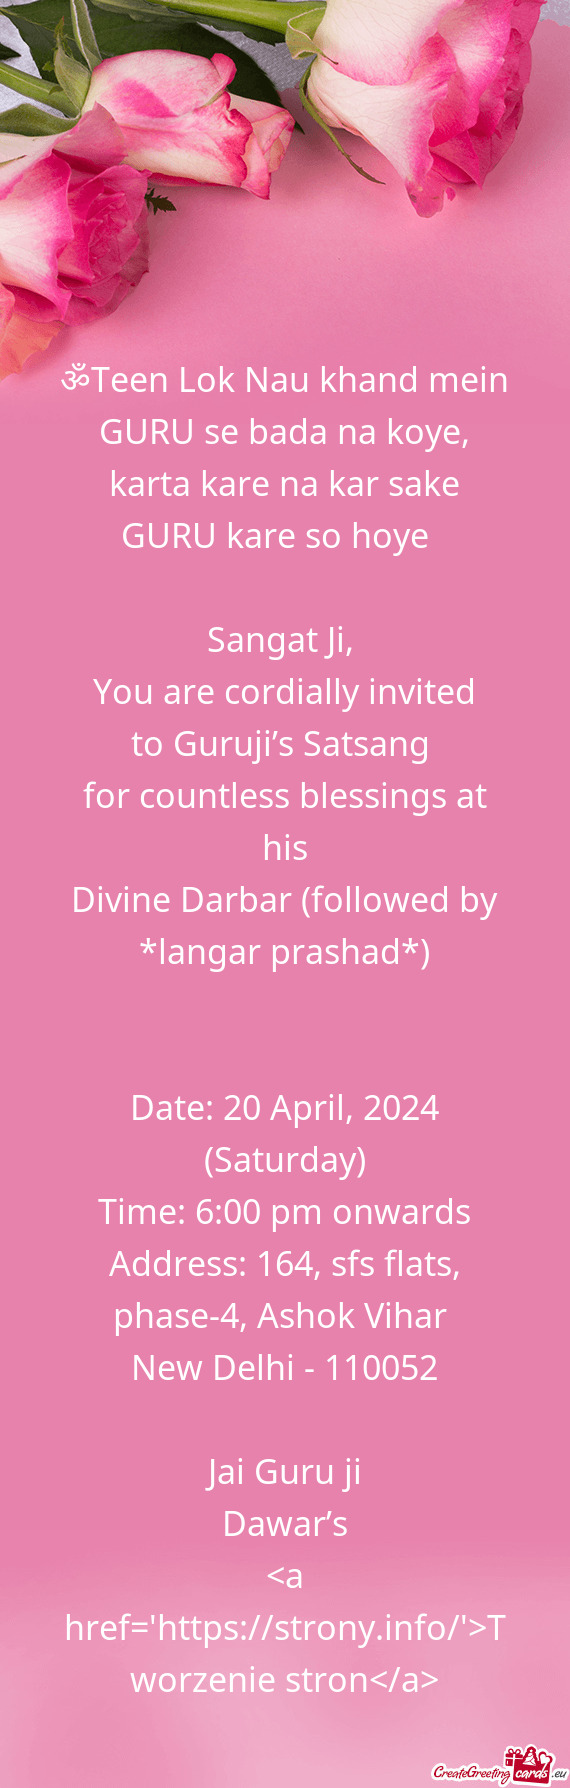 Divine Darbar (followed by *langar prashad*)